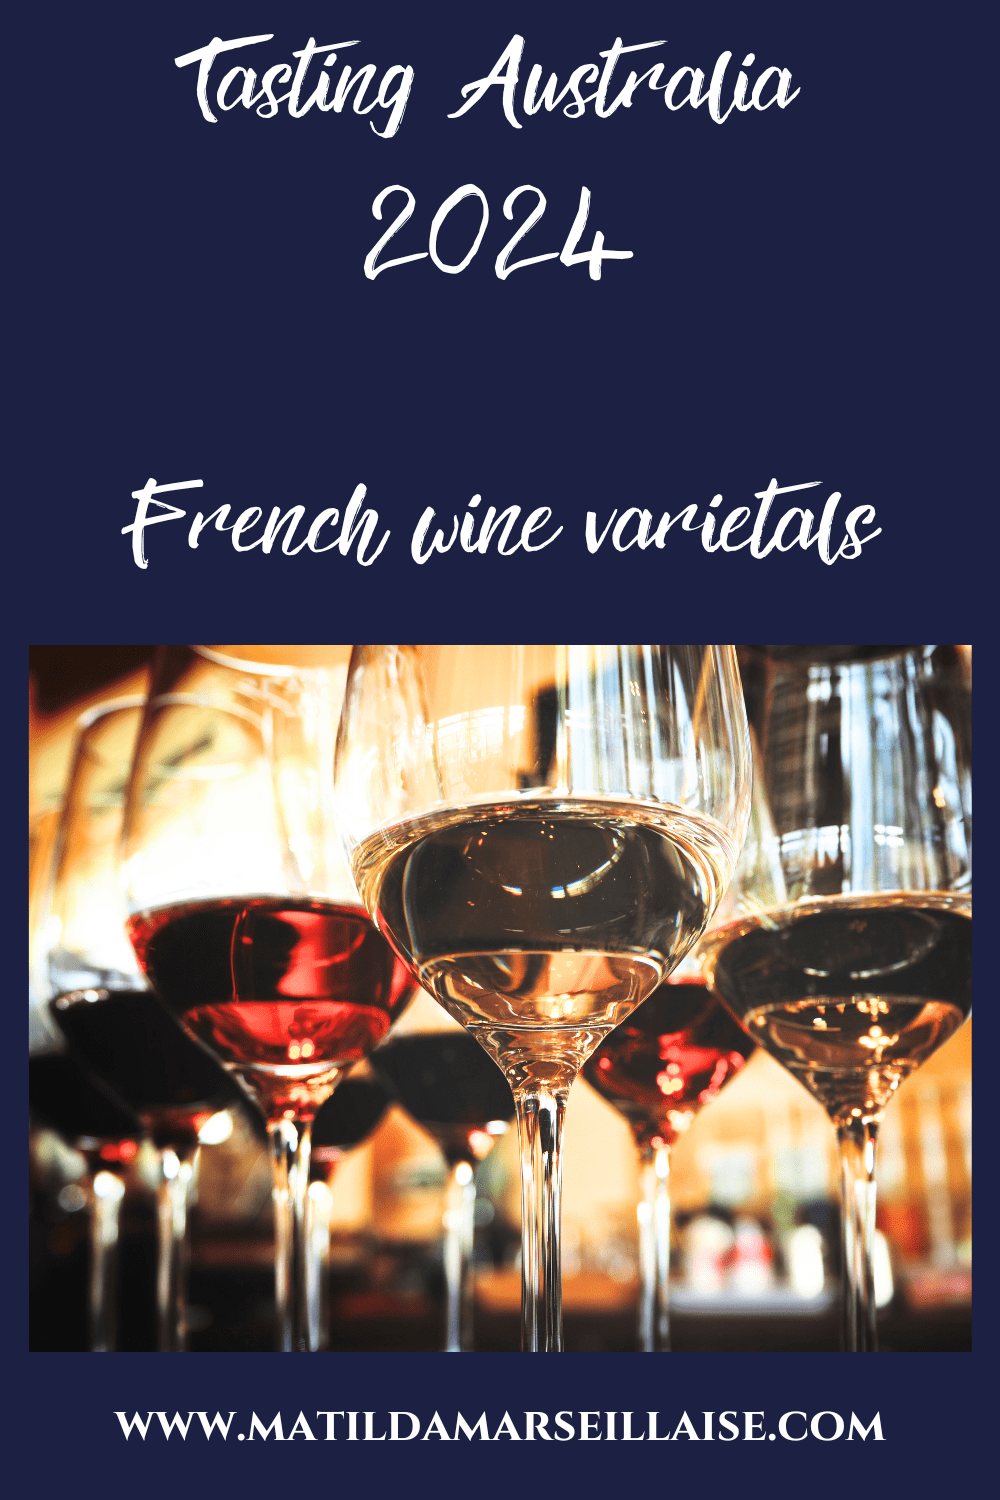 French wine varietals at Tasting Australia 2024